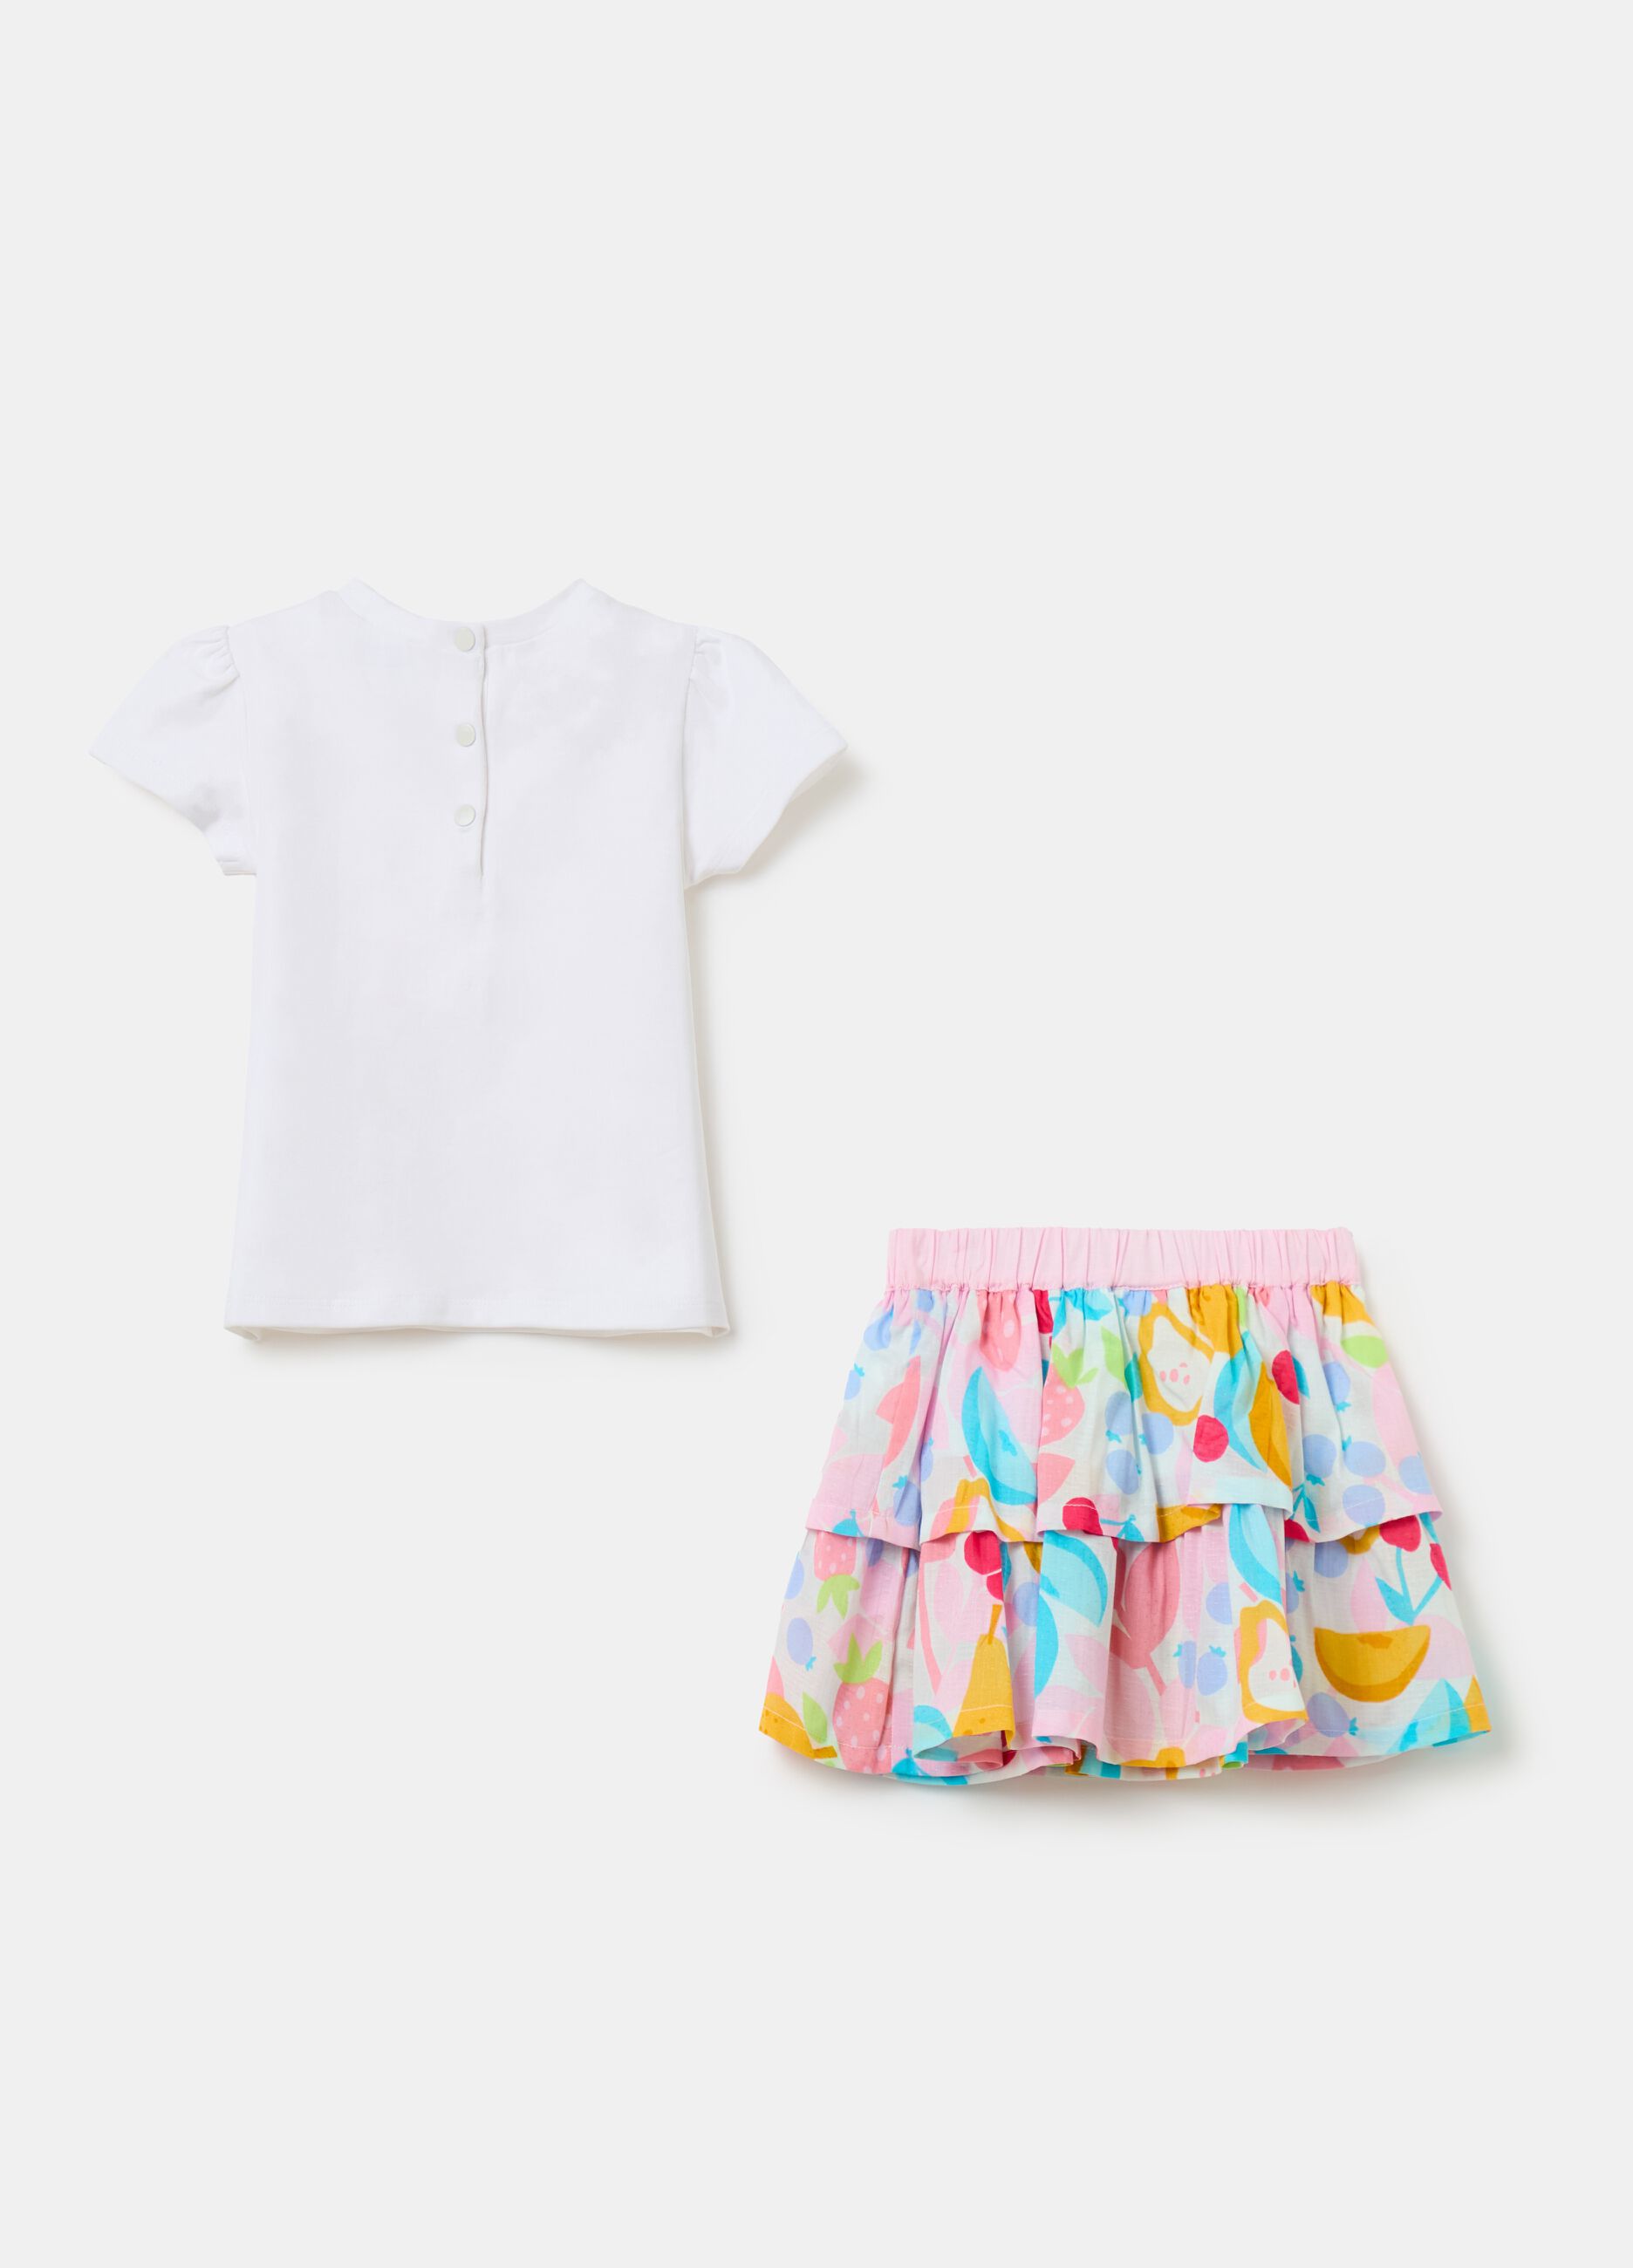 T-shirt and skirt set with fruit print